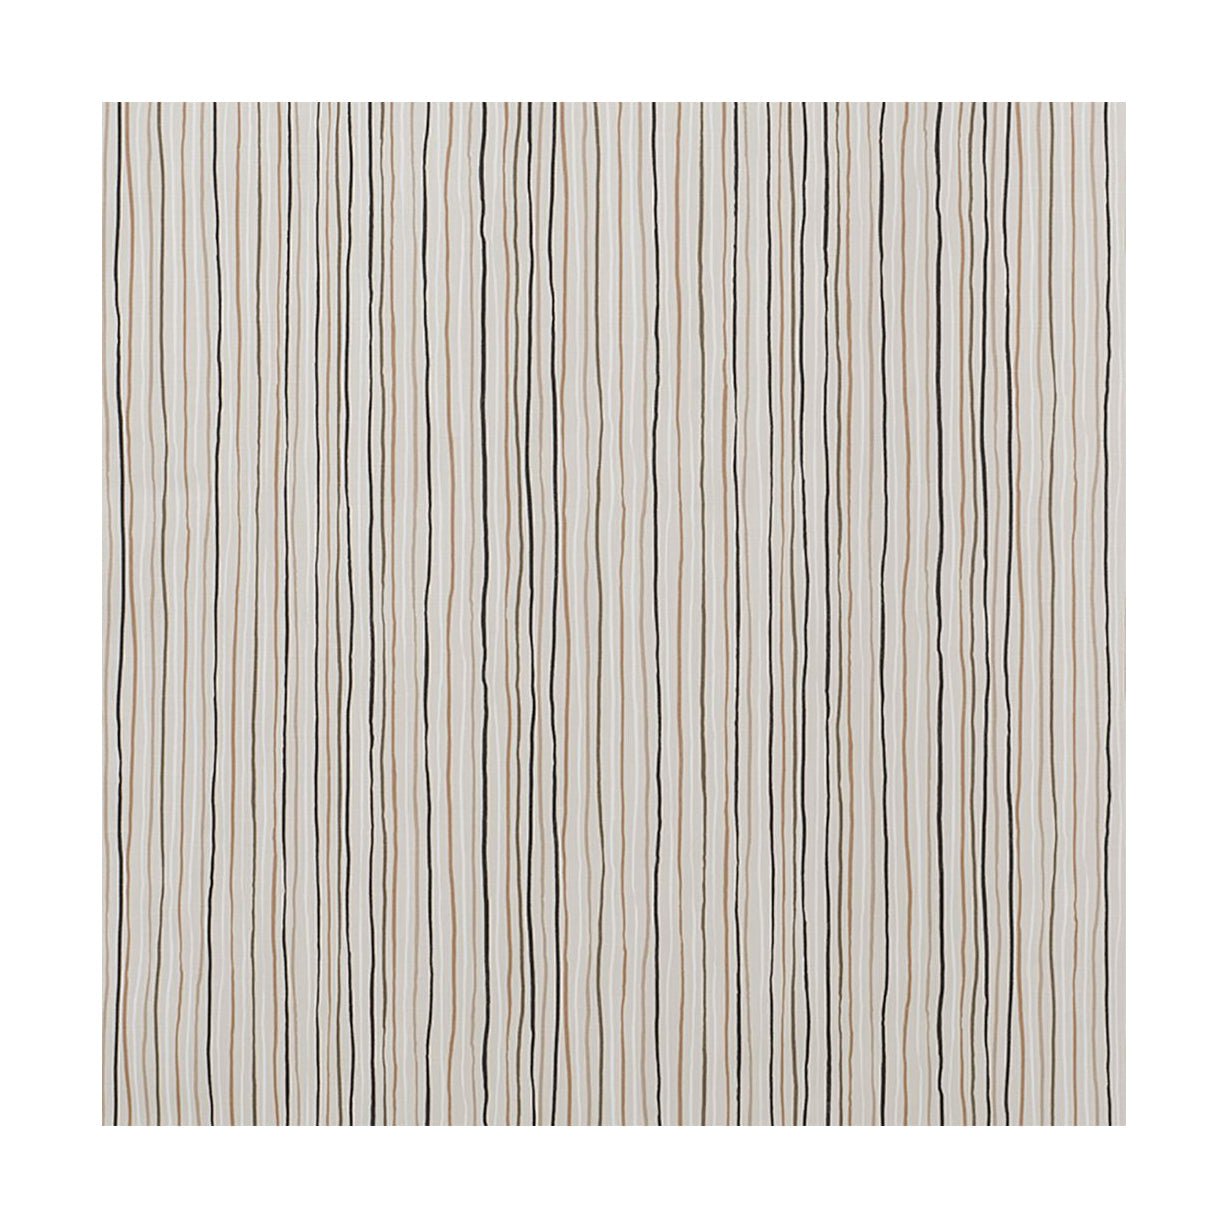 Spira Stripe CTC -tyg med akrylbredd 145 cm (pris per meter), multi natur